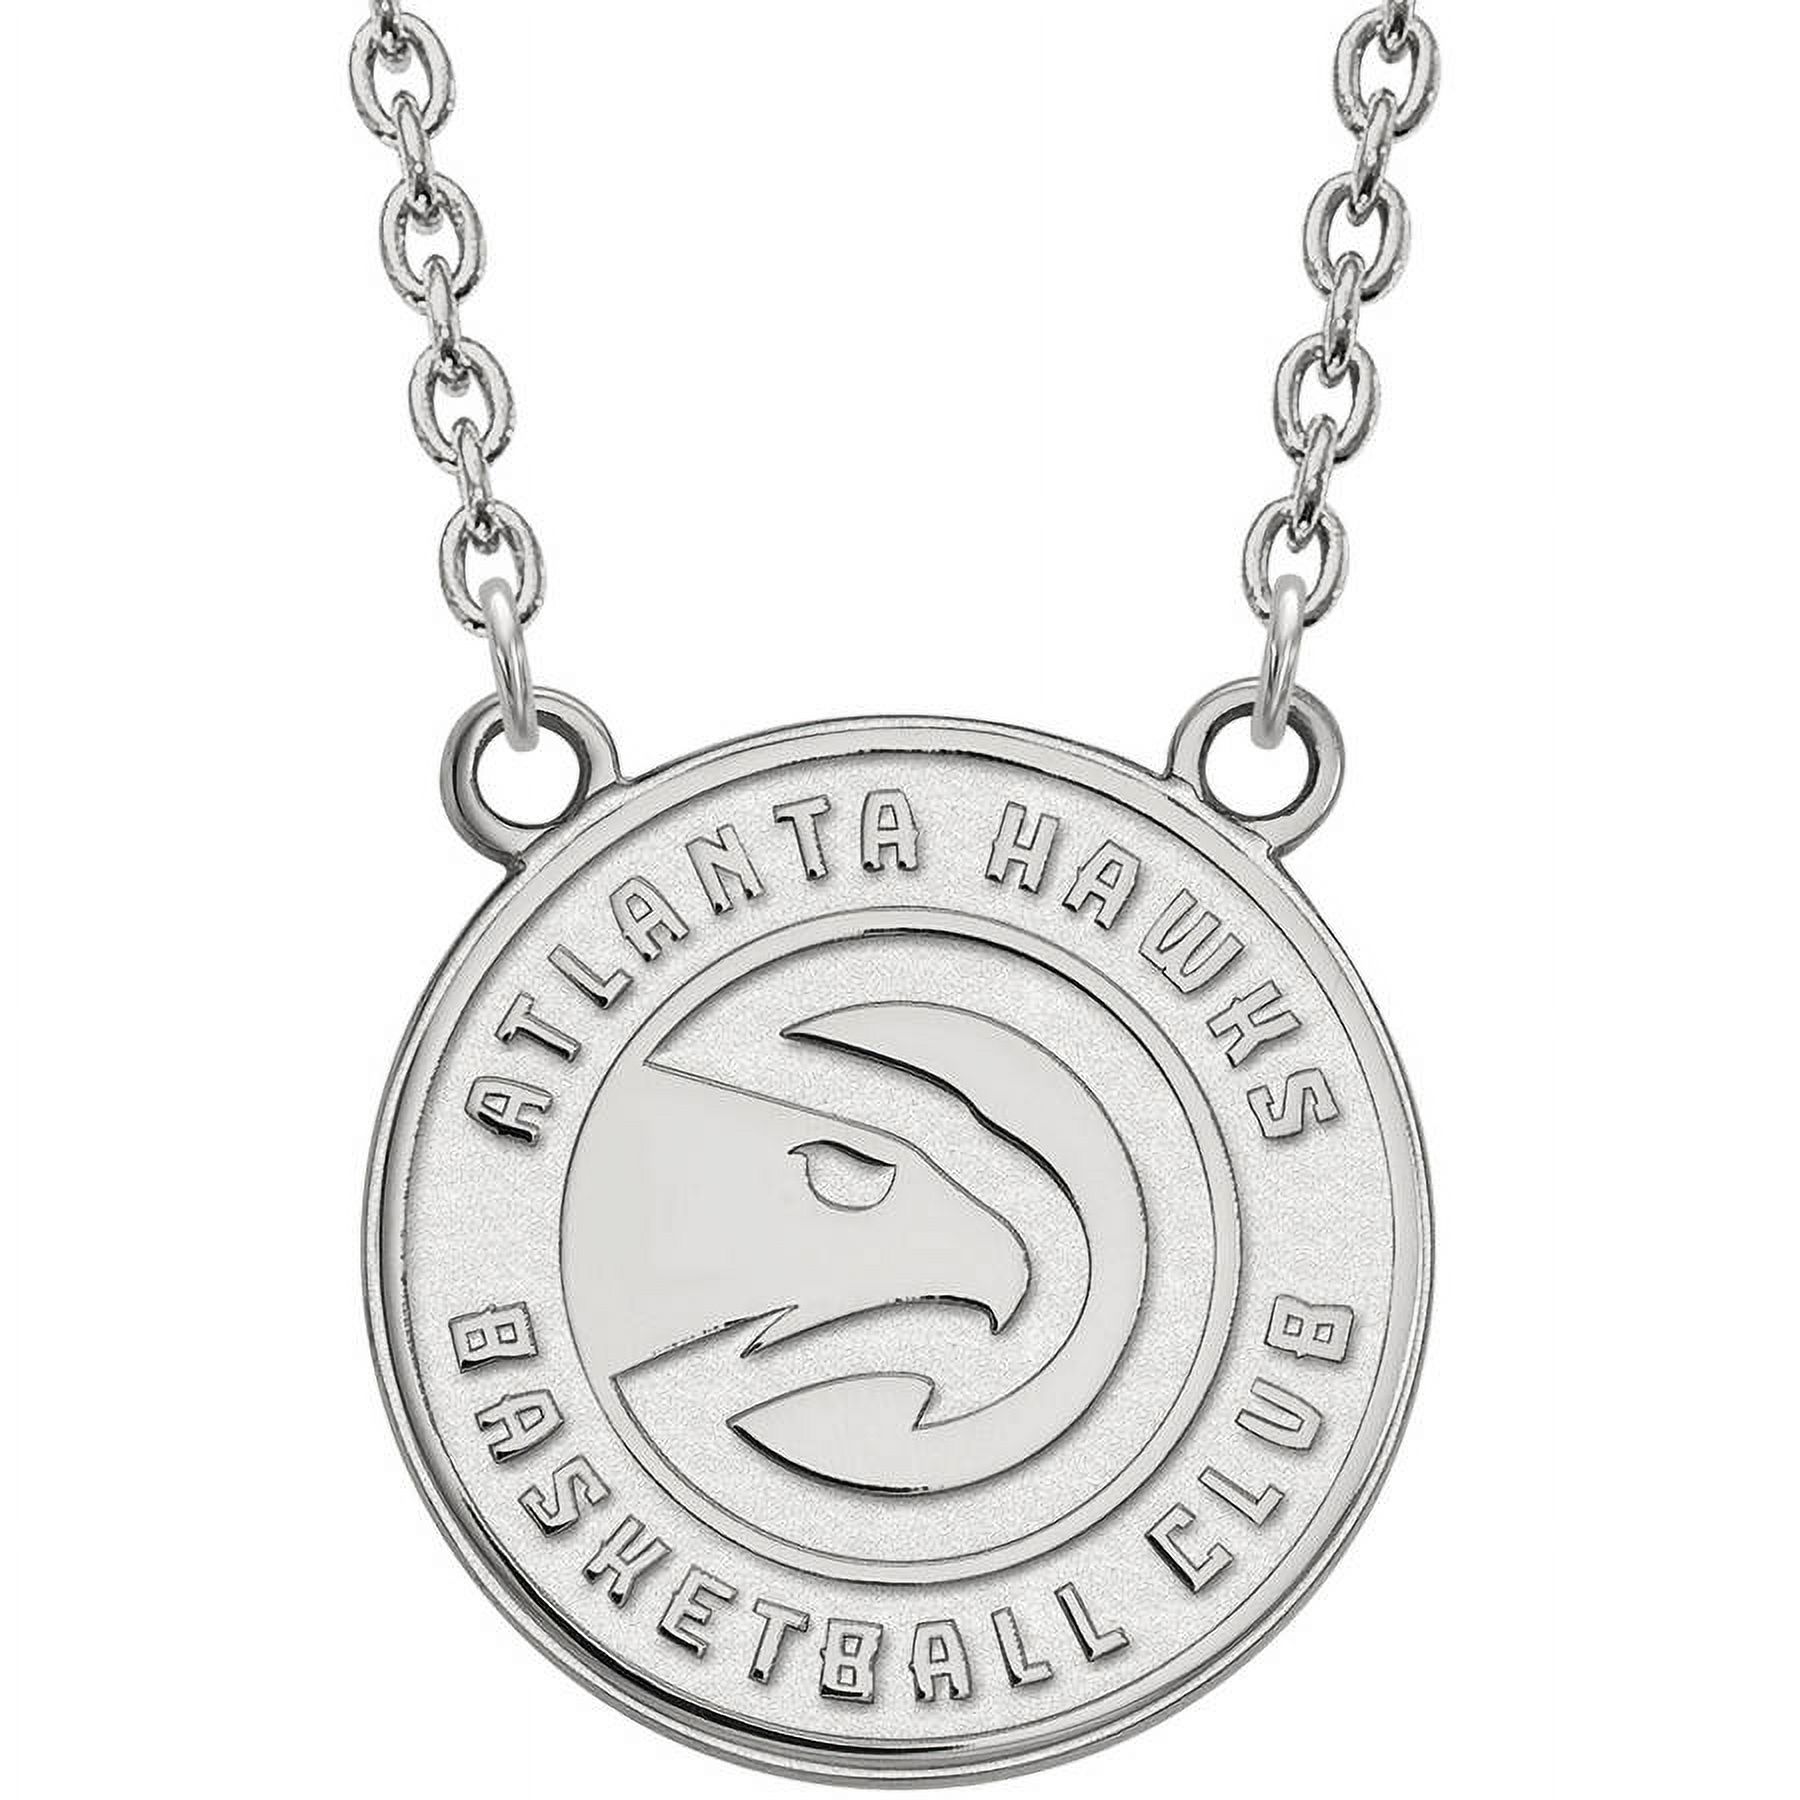 LogoArt 10 Karat White Gold NBA Atlanta Hawks Large Pendant with Necklace - image 1 of 5